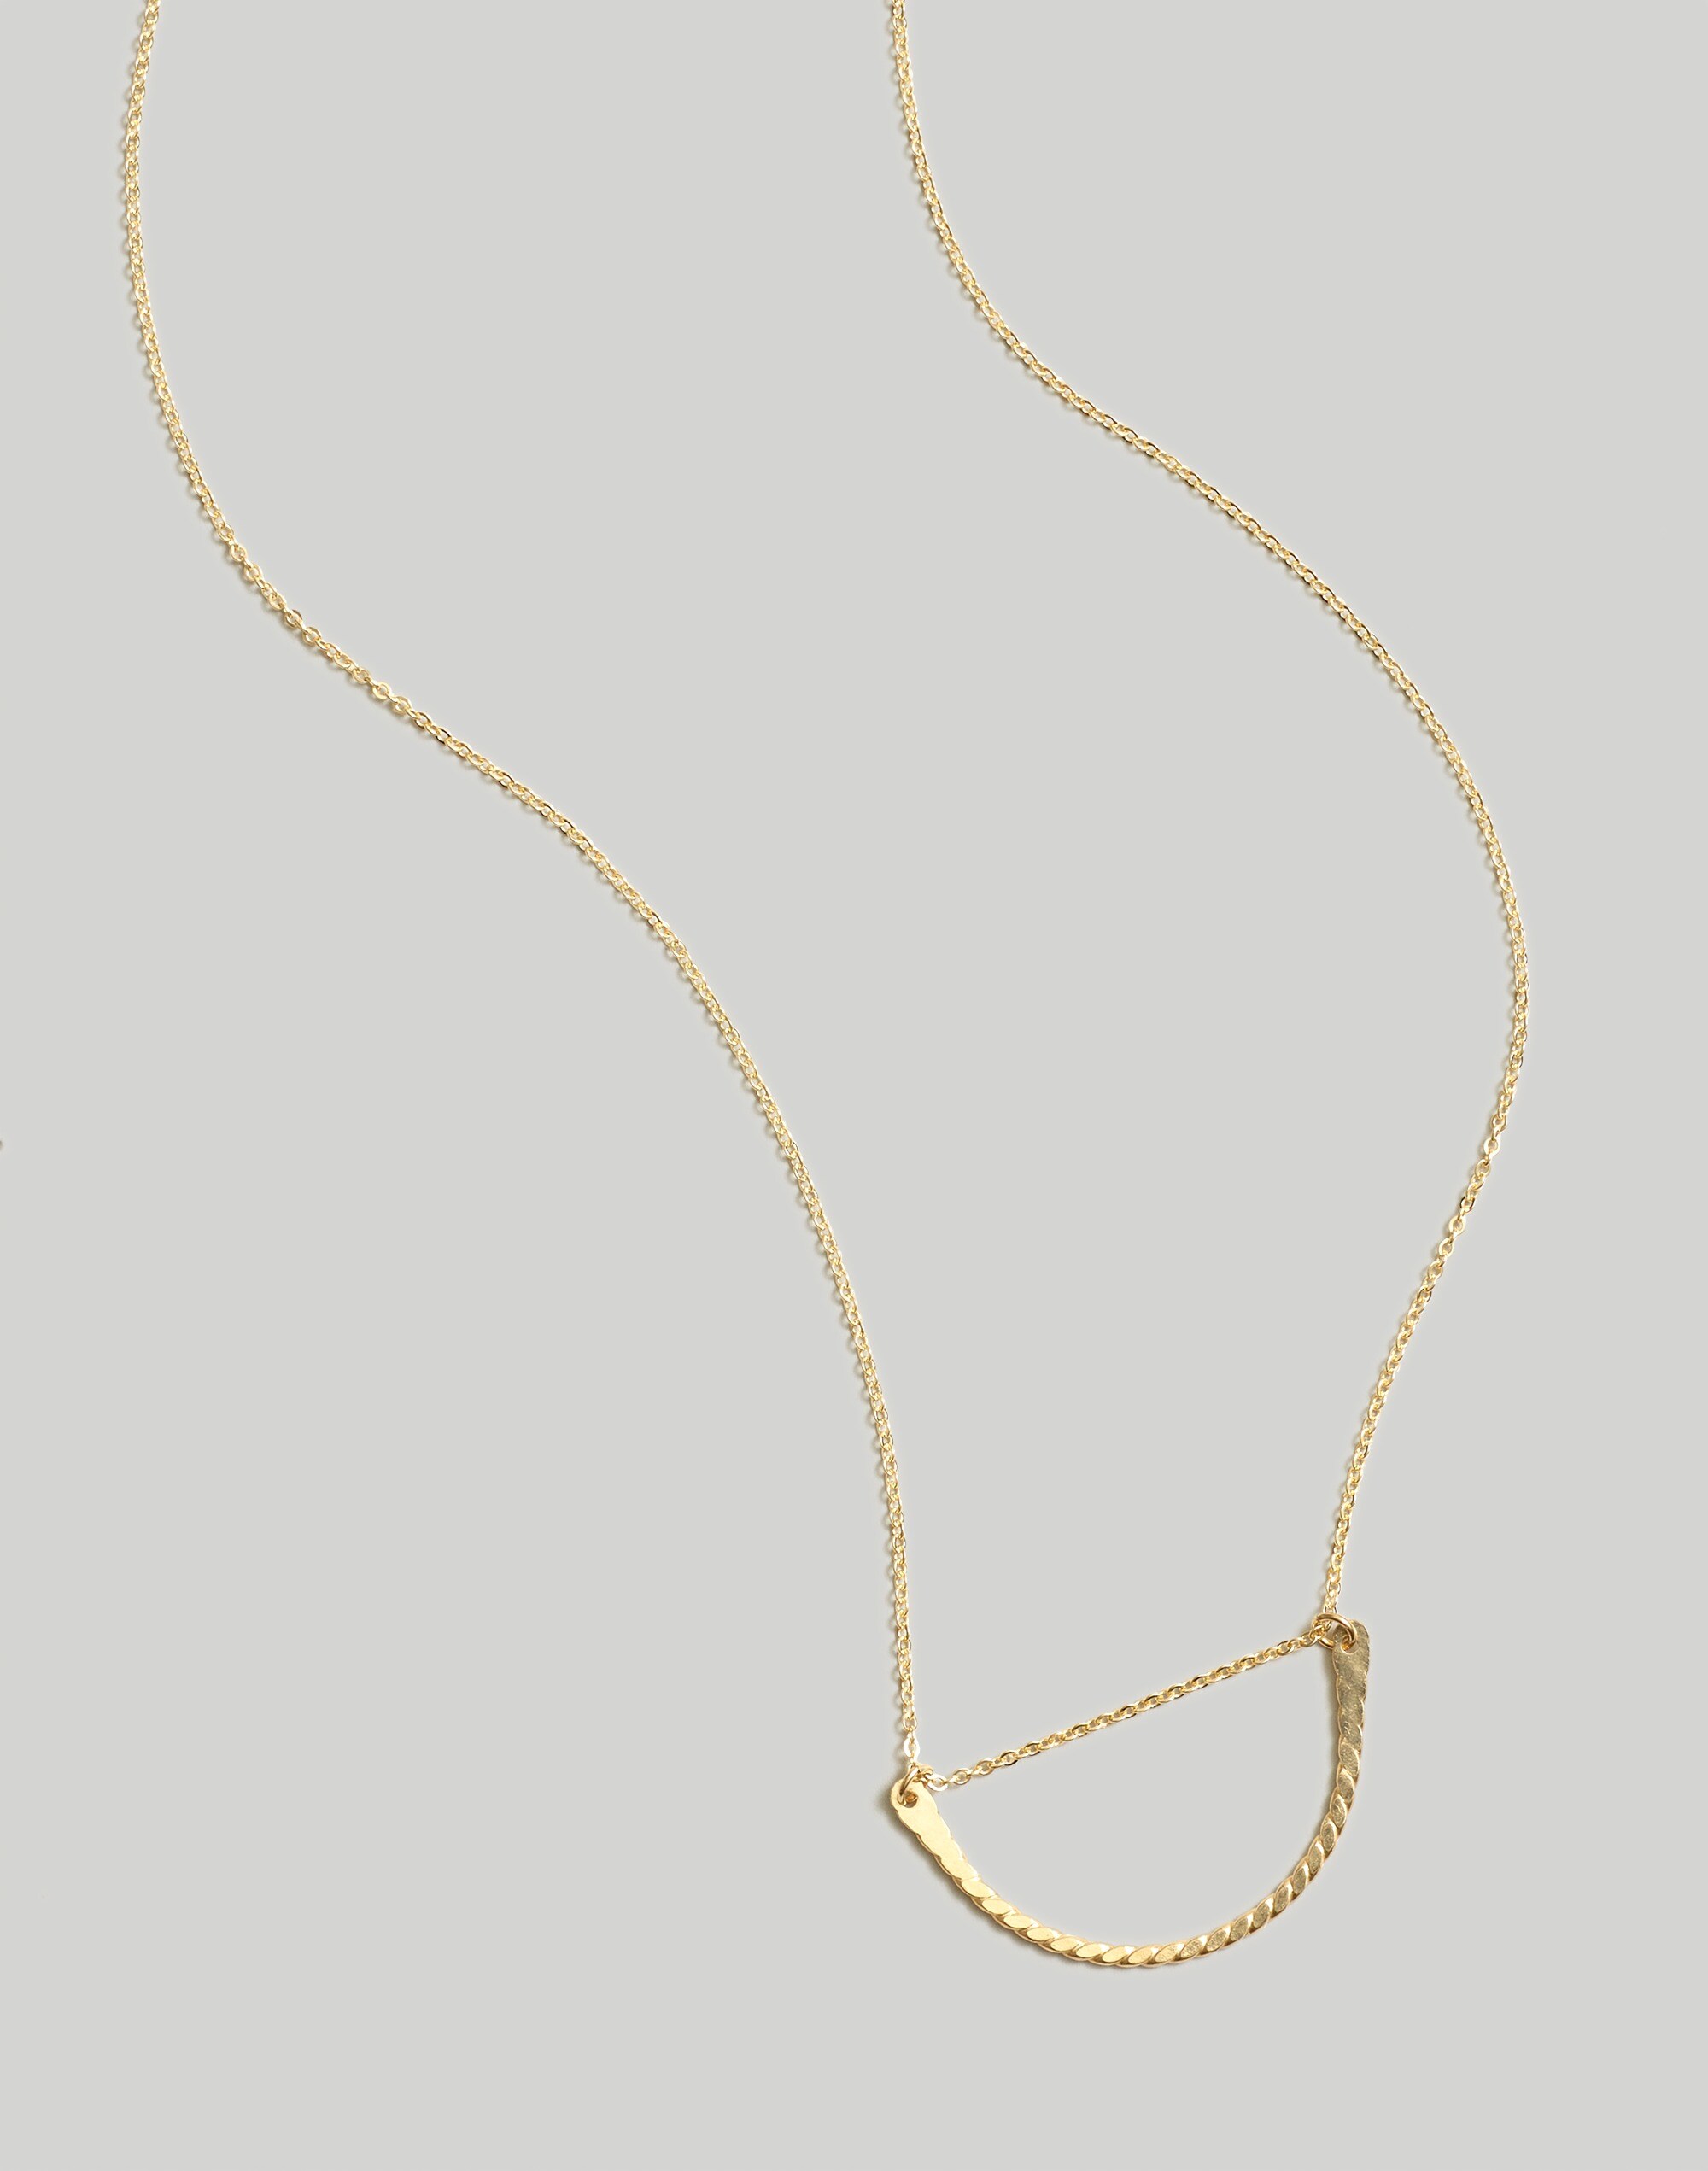 In Situ Jewelry 14k Gold-Filled Serena Necklace